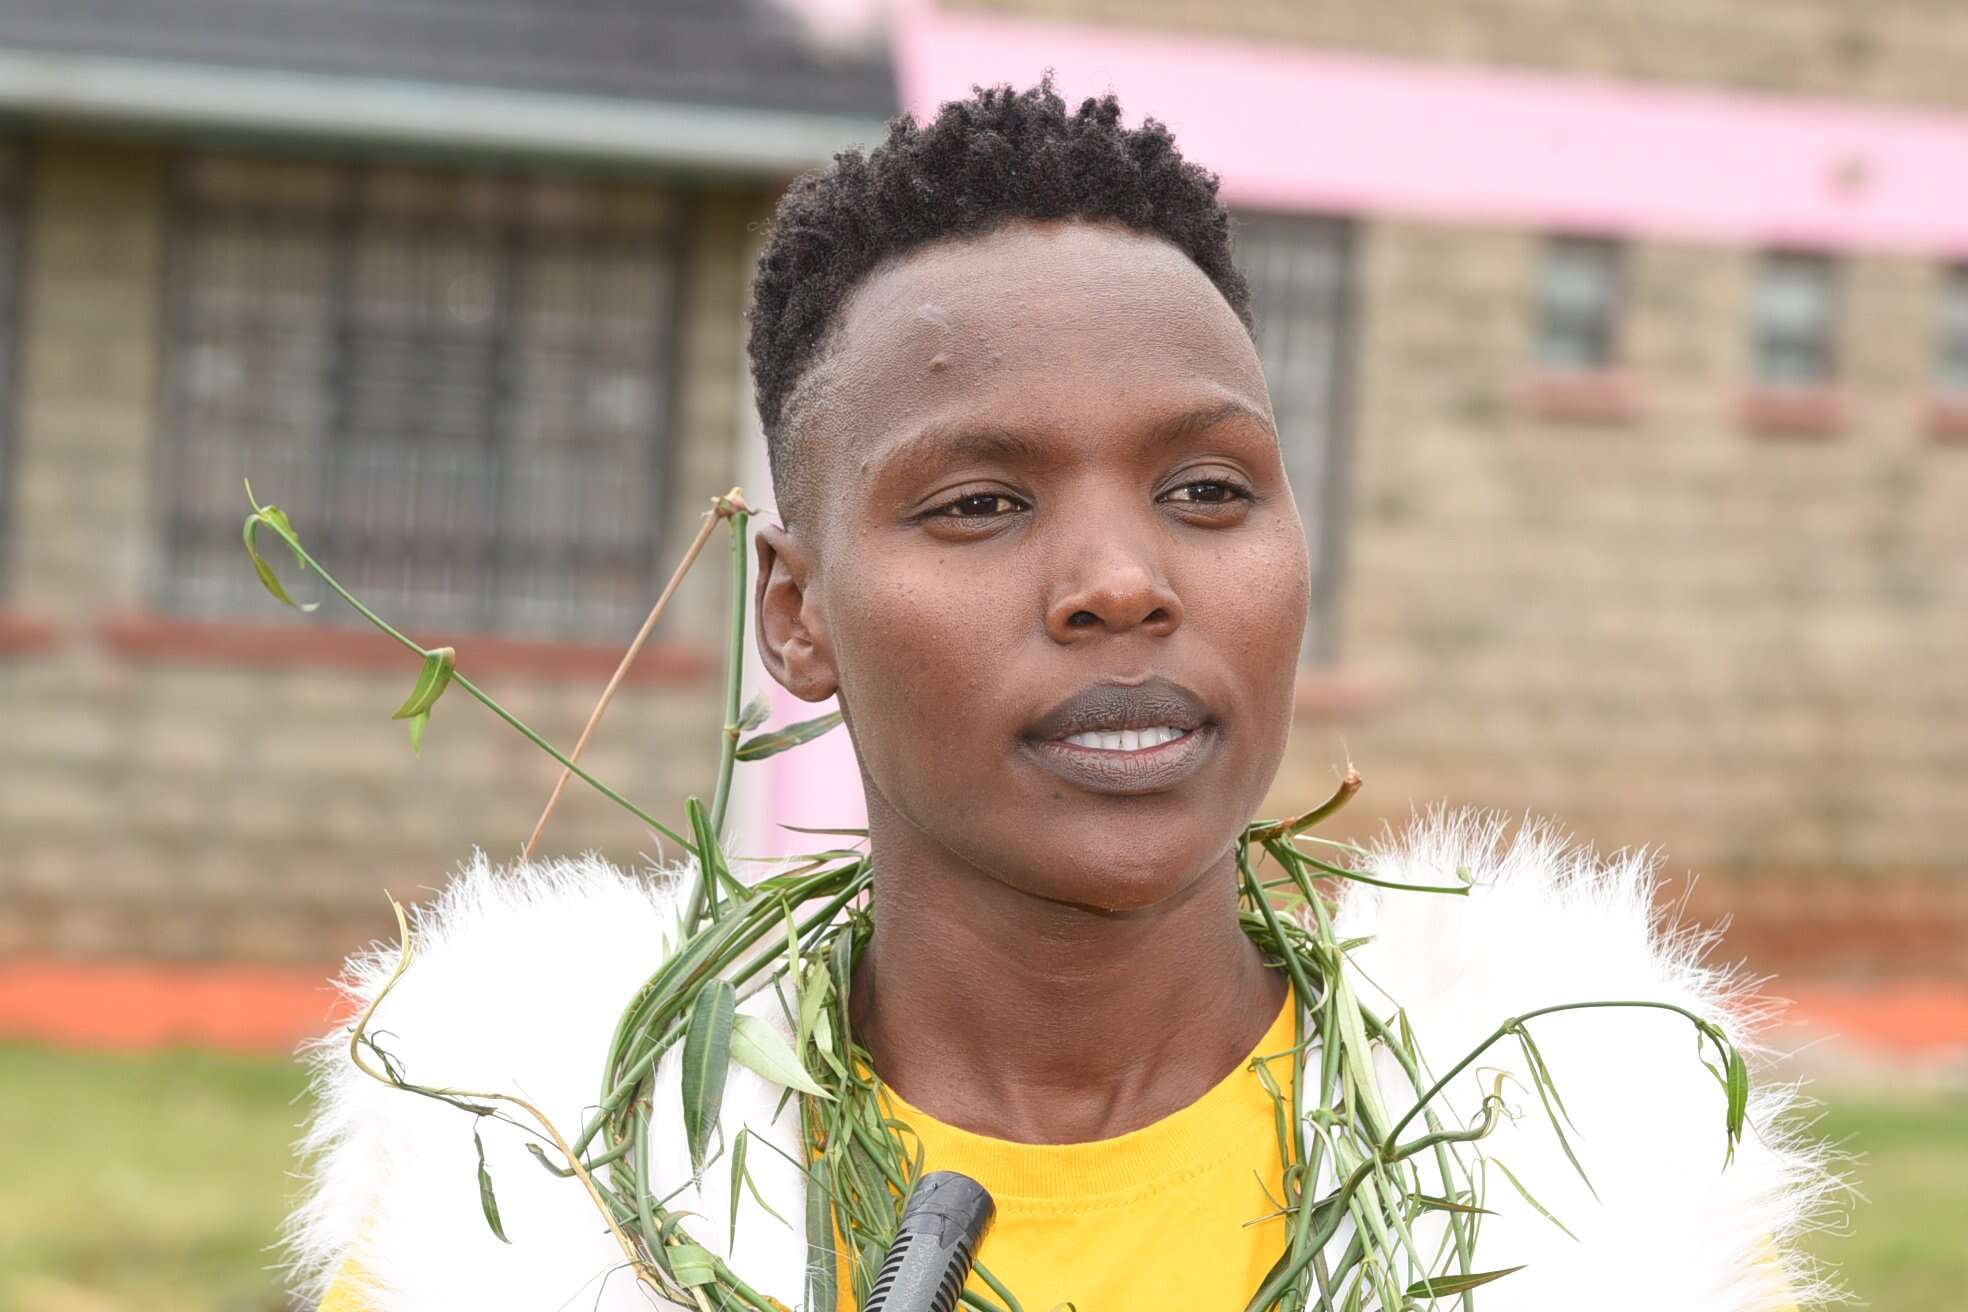 Pulse Kenya - Nimechoka na scandals. I don't think I will